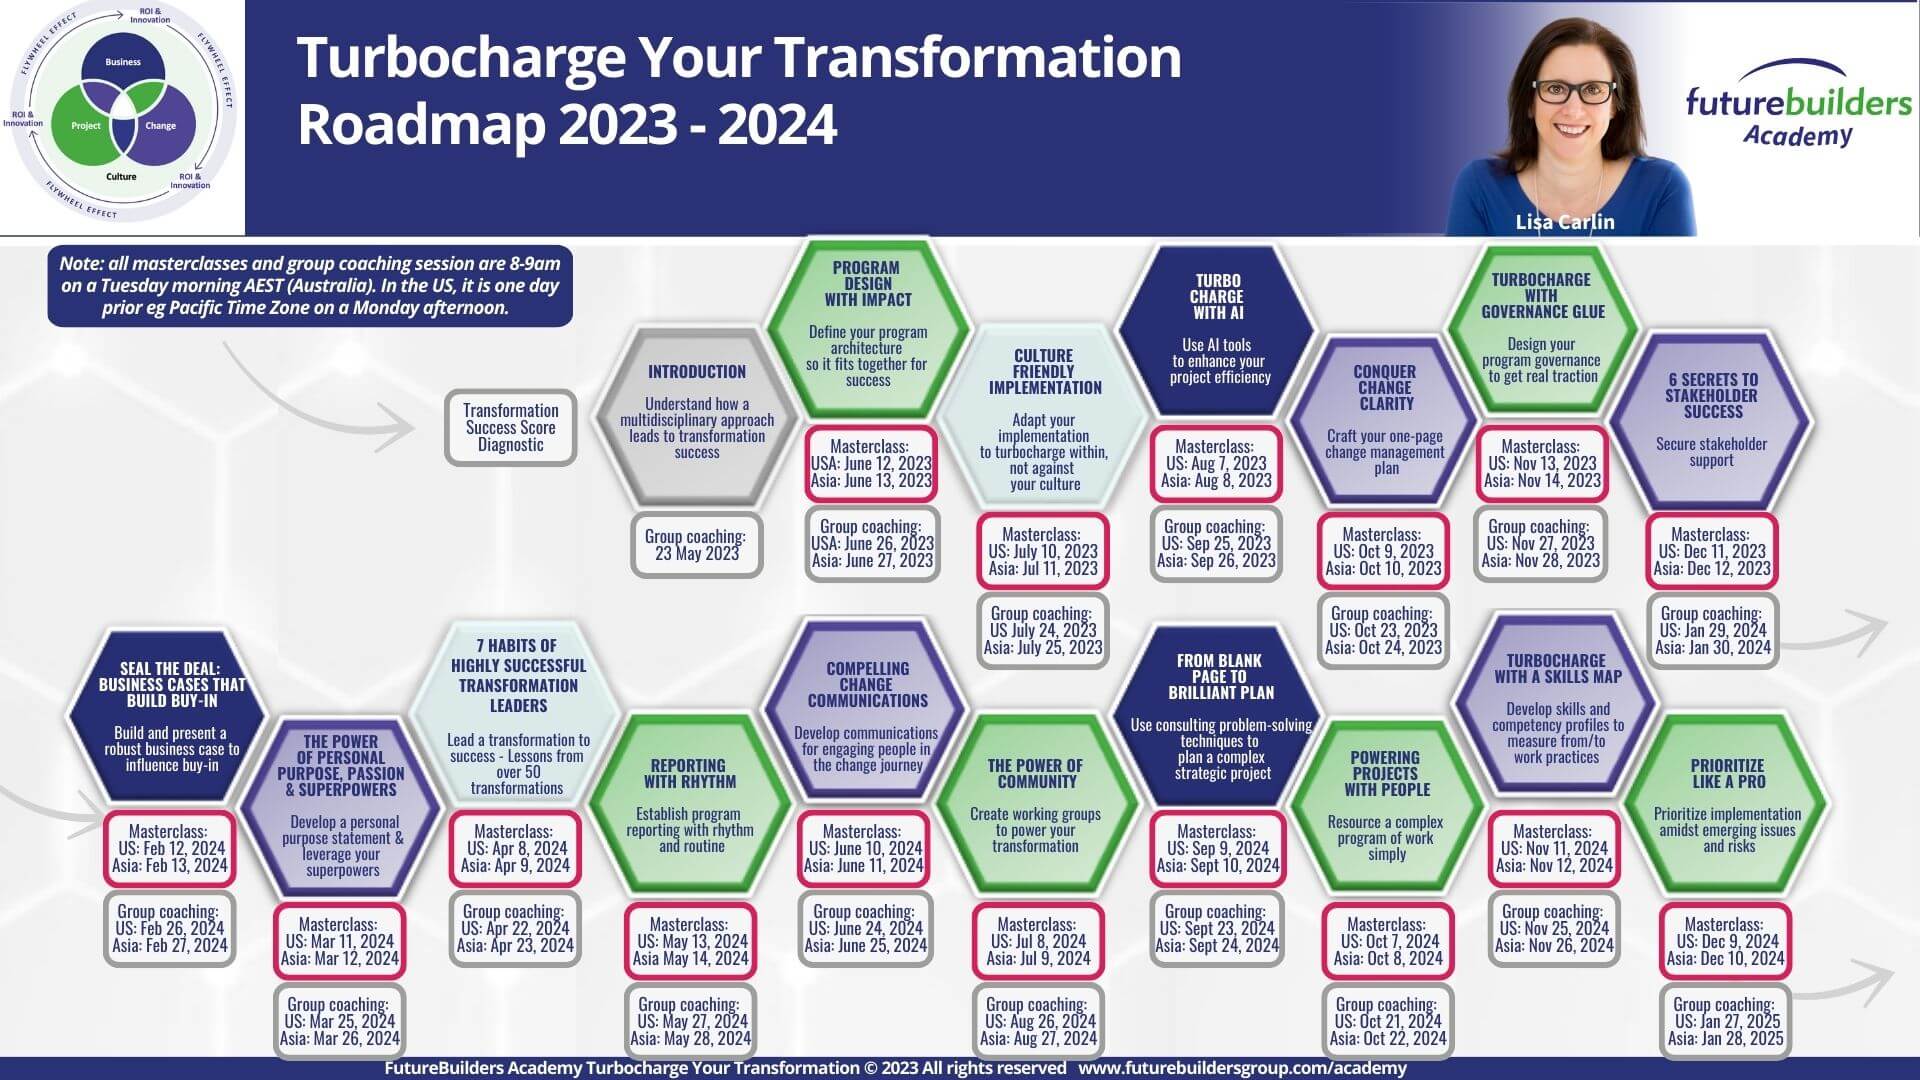 FutureBuilders Academy | Turbocharge Your Transformation Roadmap